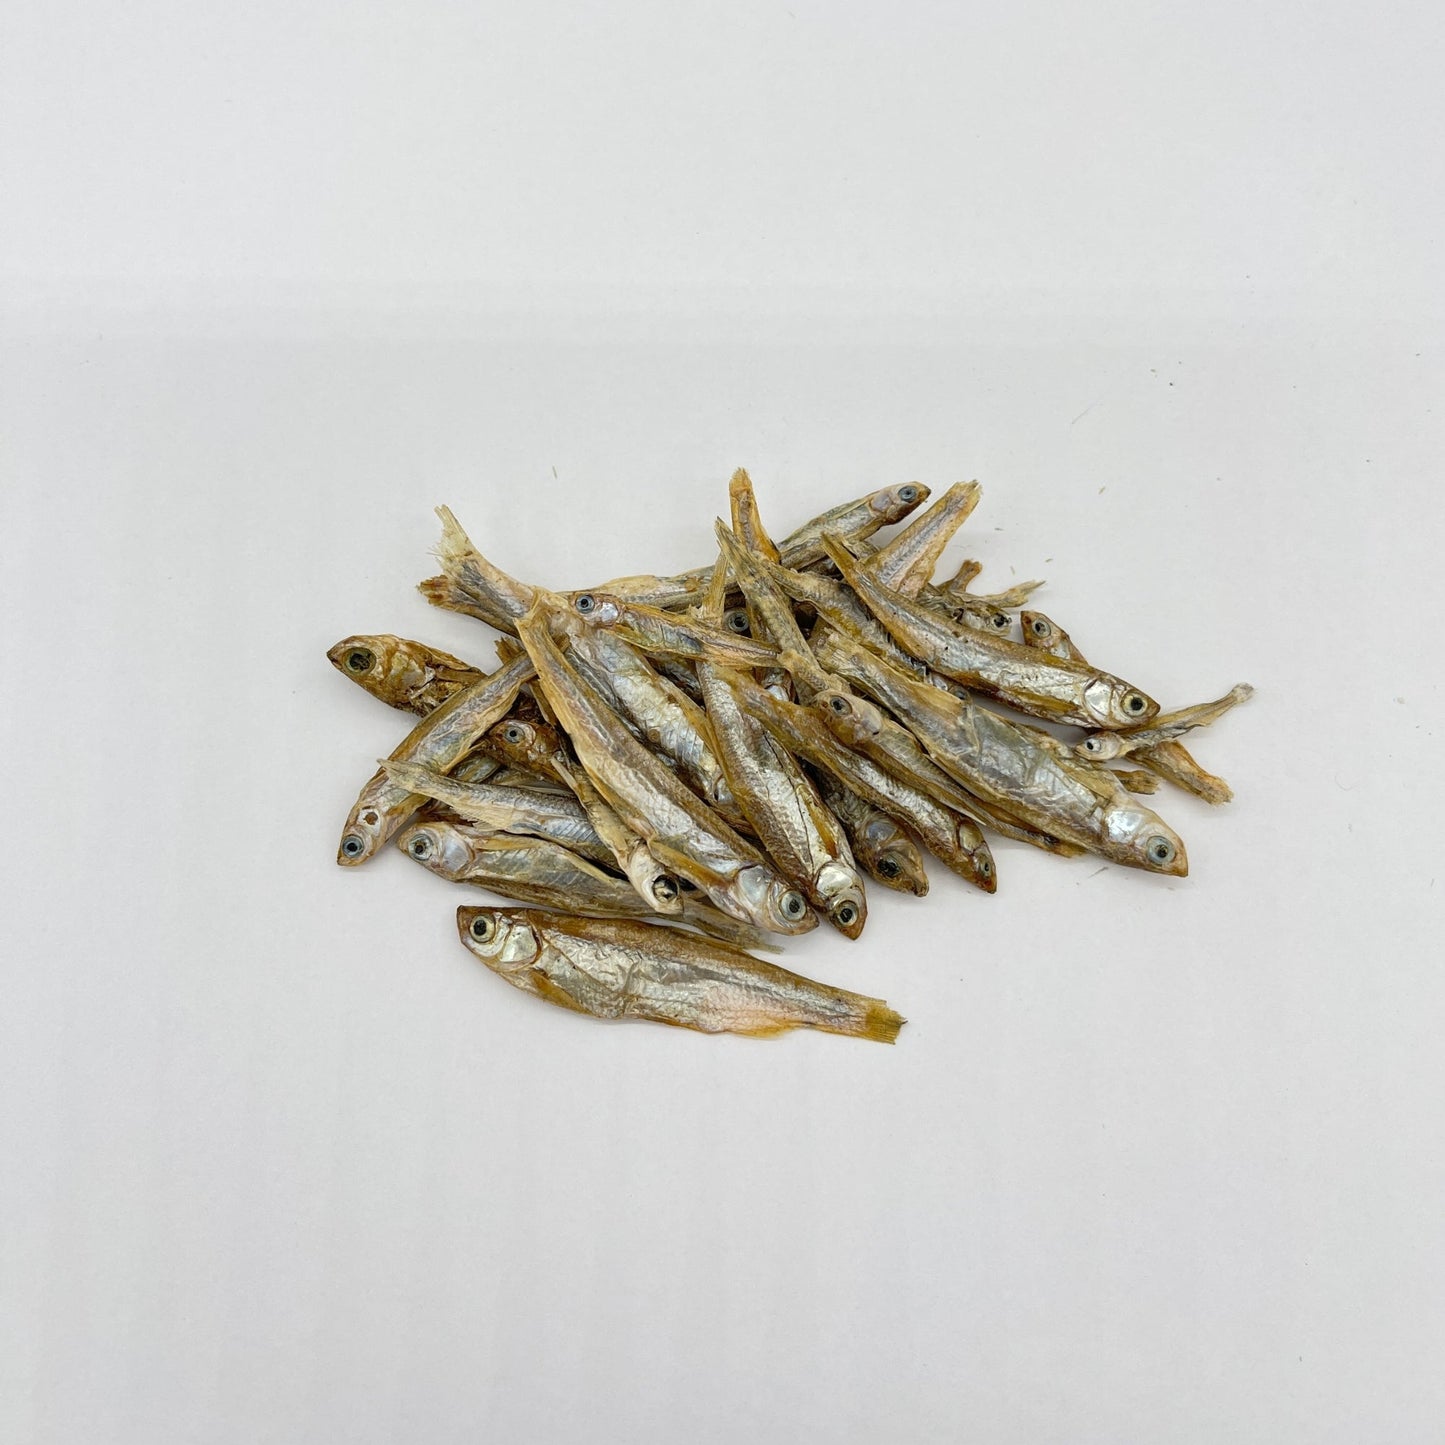 Iso Chow Freeze Dried Minnows Isopod Food – Isopod Depot